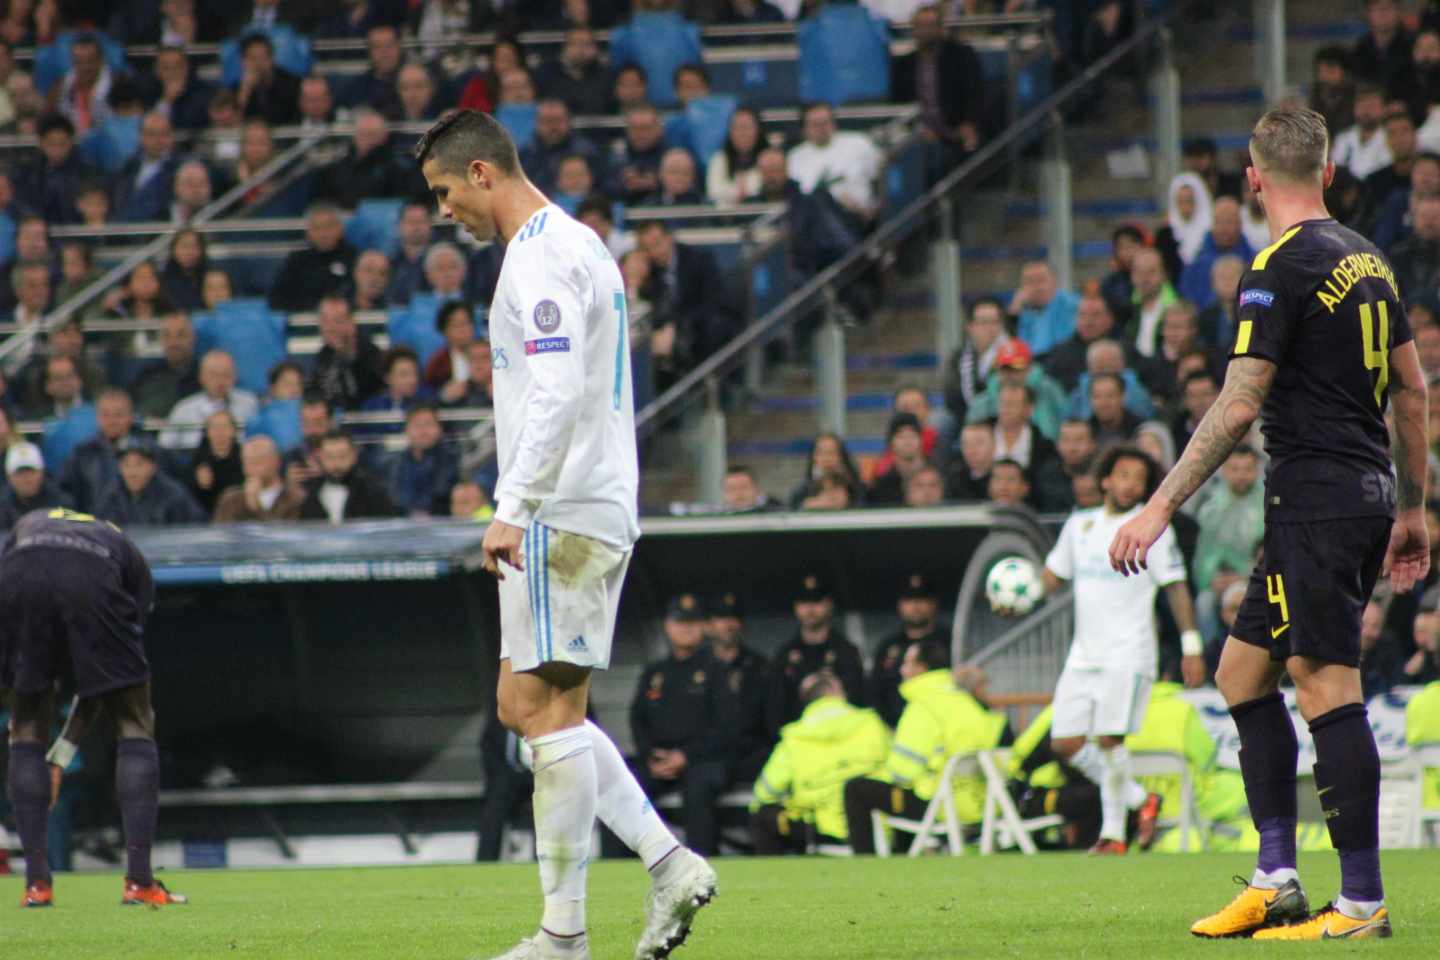 El jugador del Real Madrid, Cristiano Ronaldo.